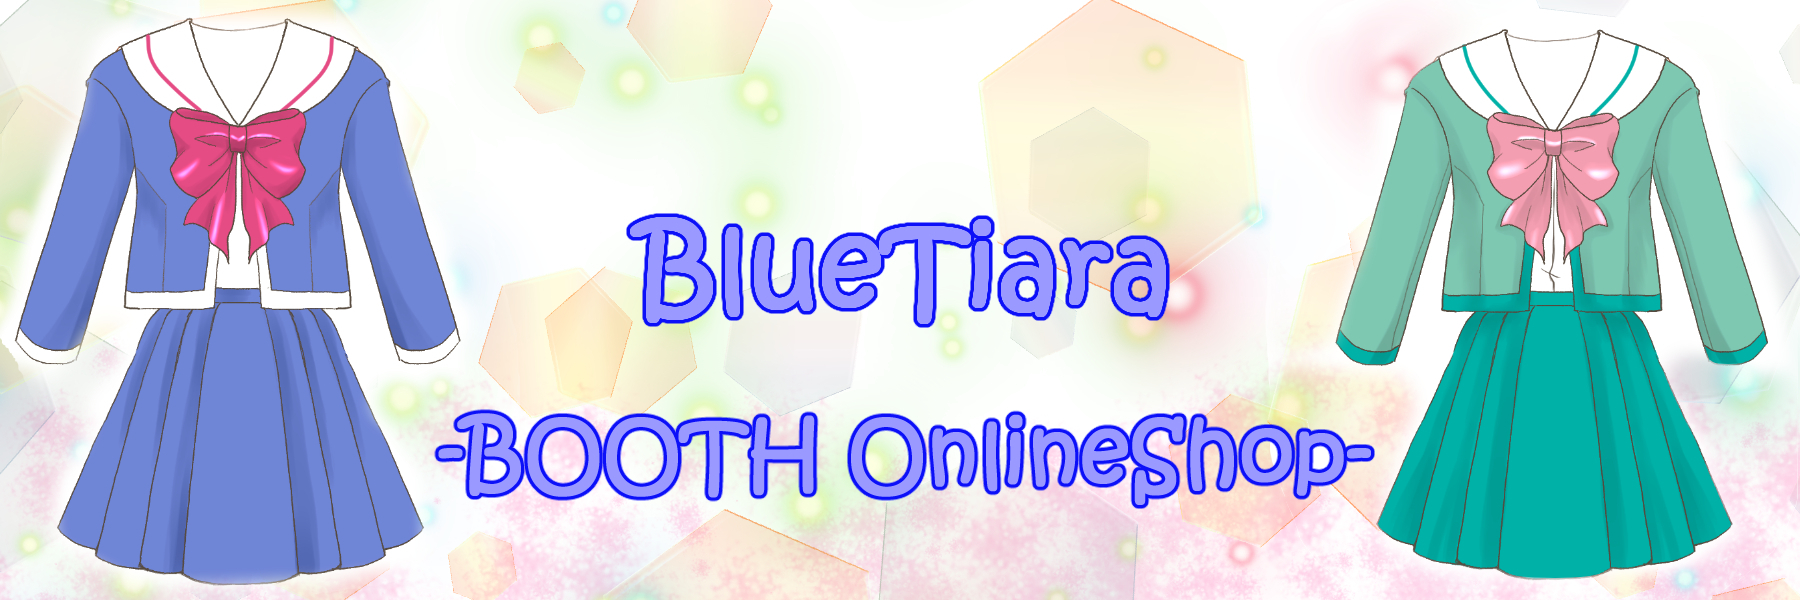 BlueTiara